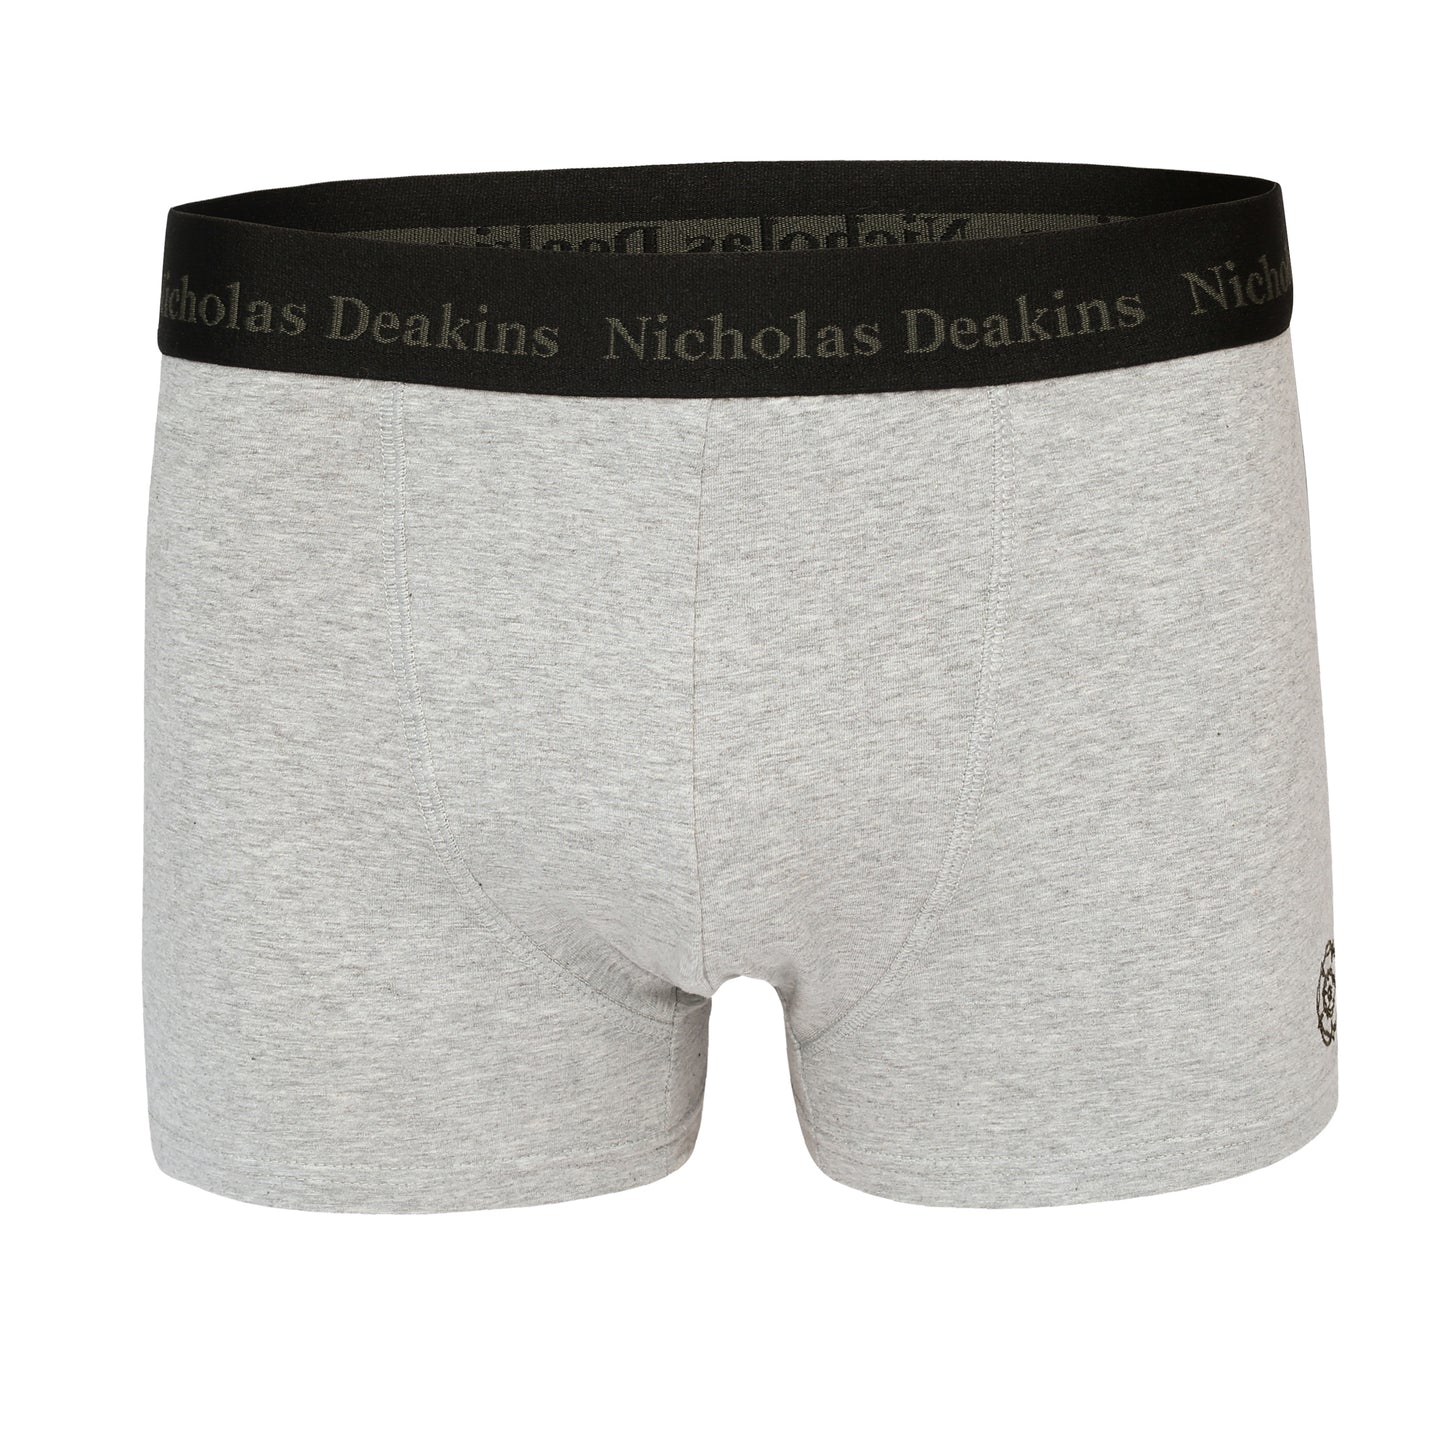 Nicholas Deakins Mens Boxer Shorts 2 Pack - Black/Grey